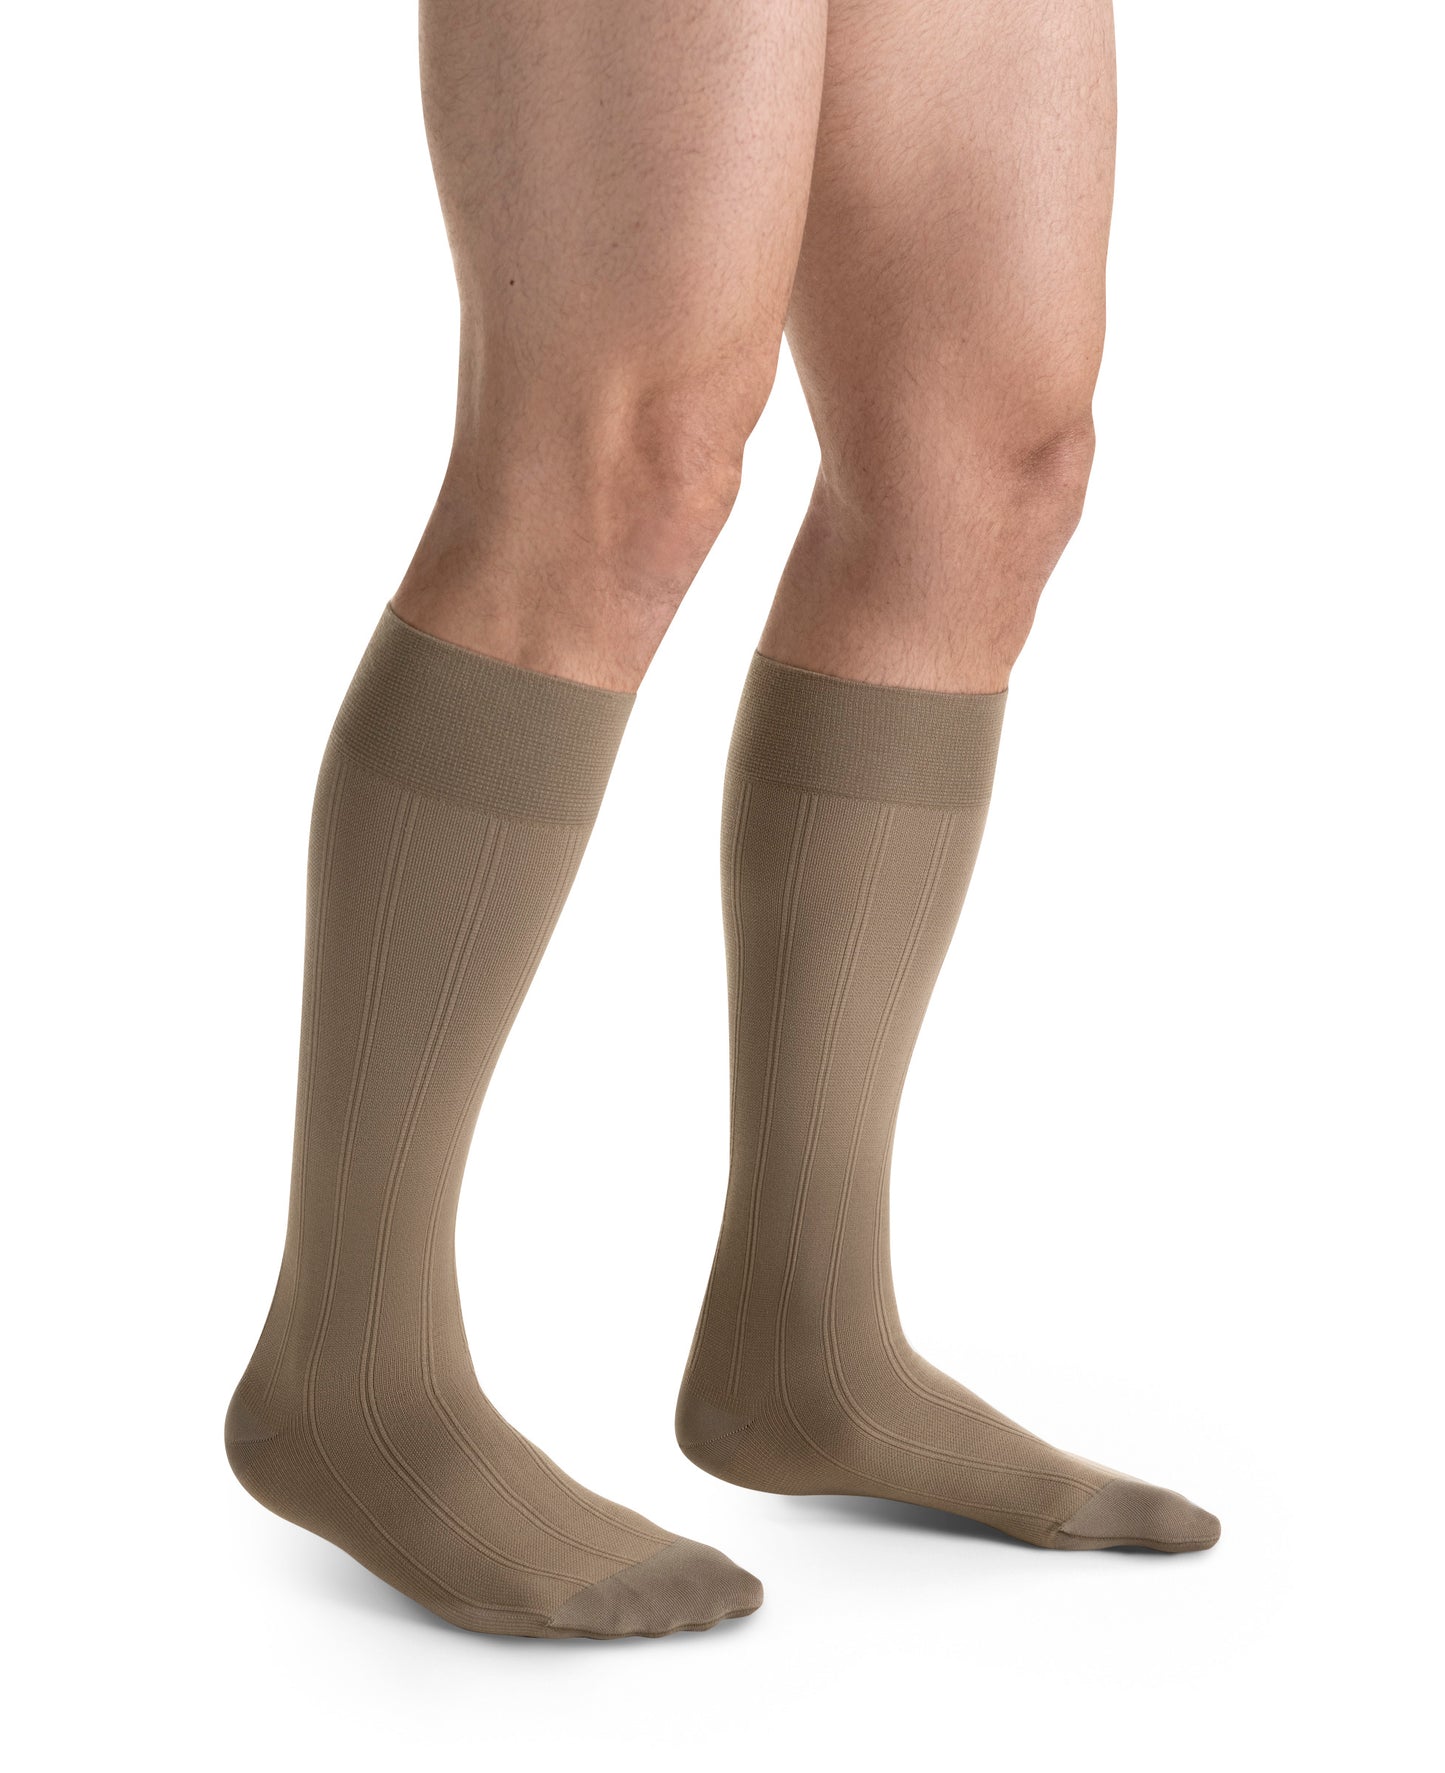 JOBST forMen Casual Compression Socks 20-30 mmHg Knee High Closed Toe